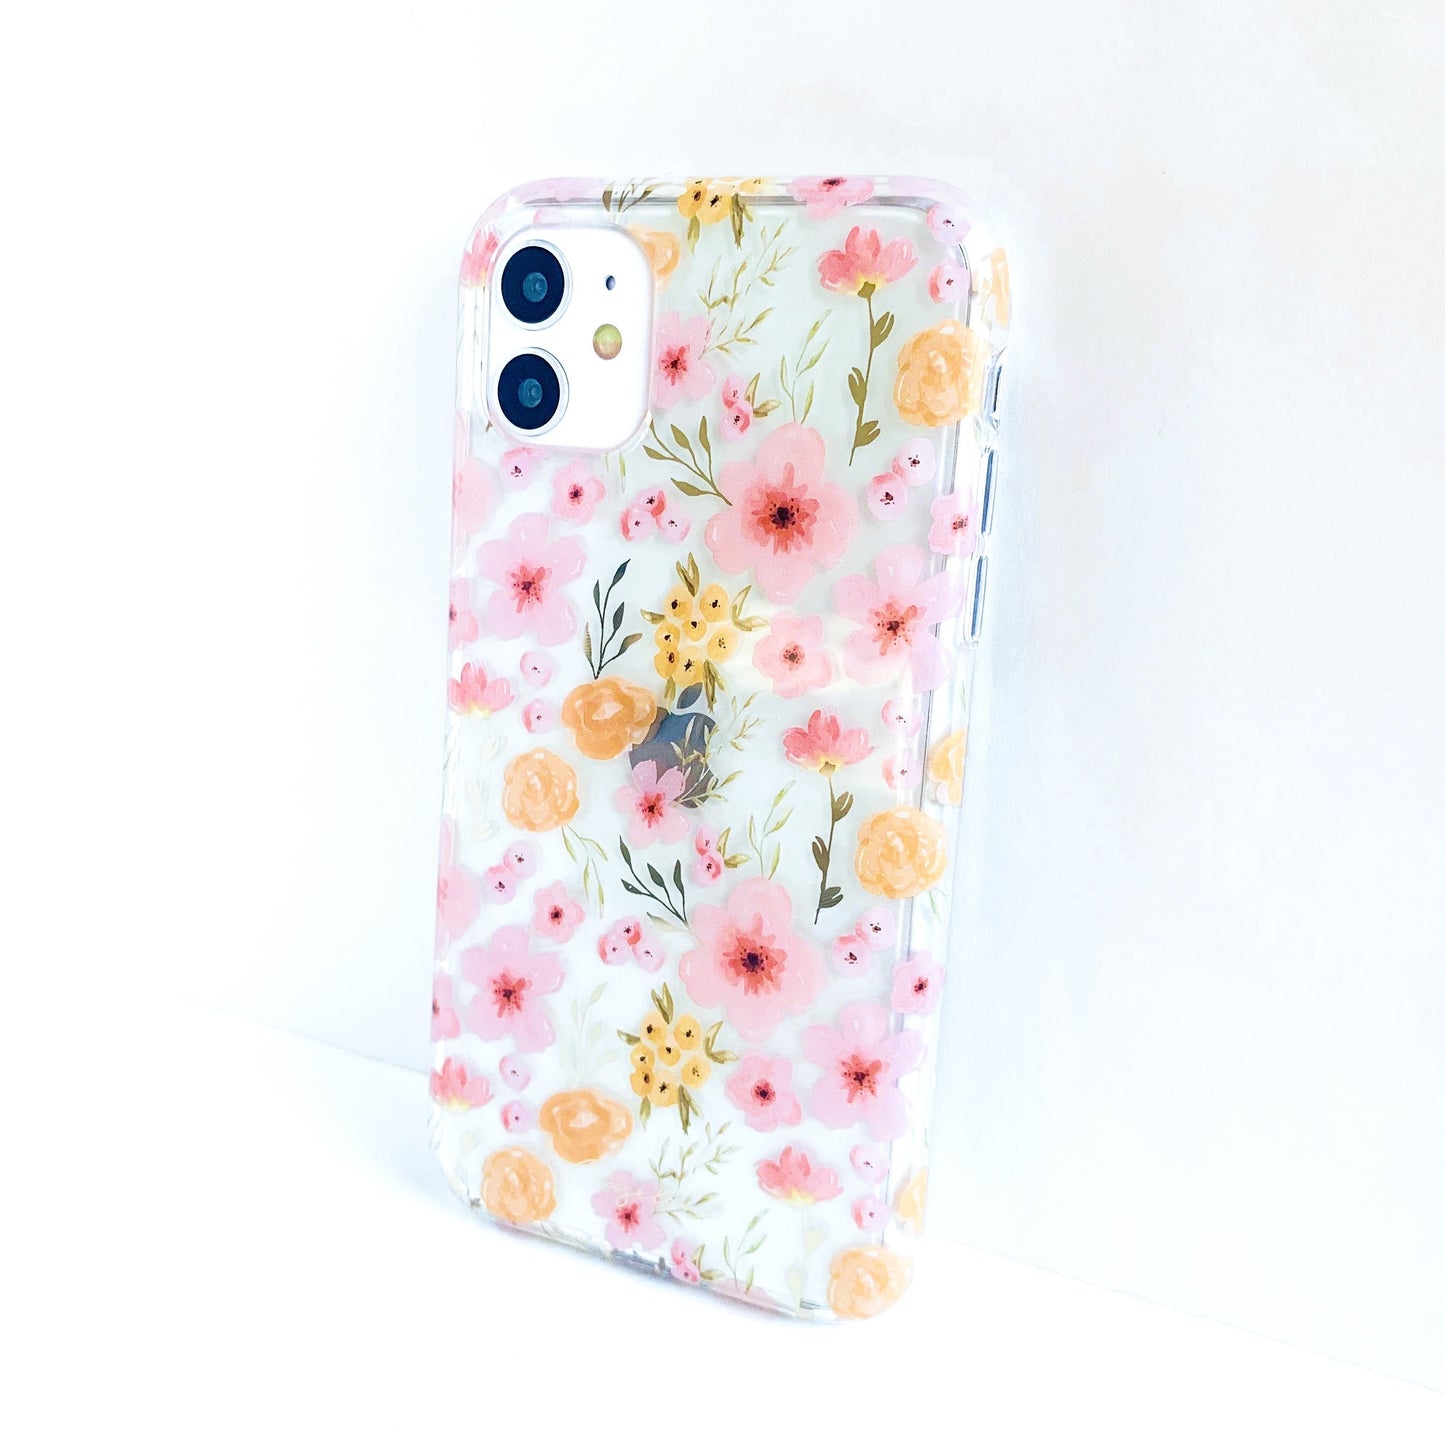 Cherry Blossom iPhone Case